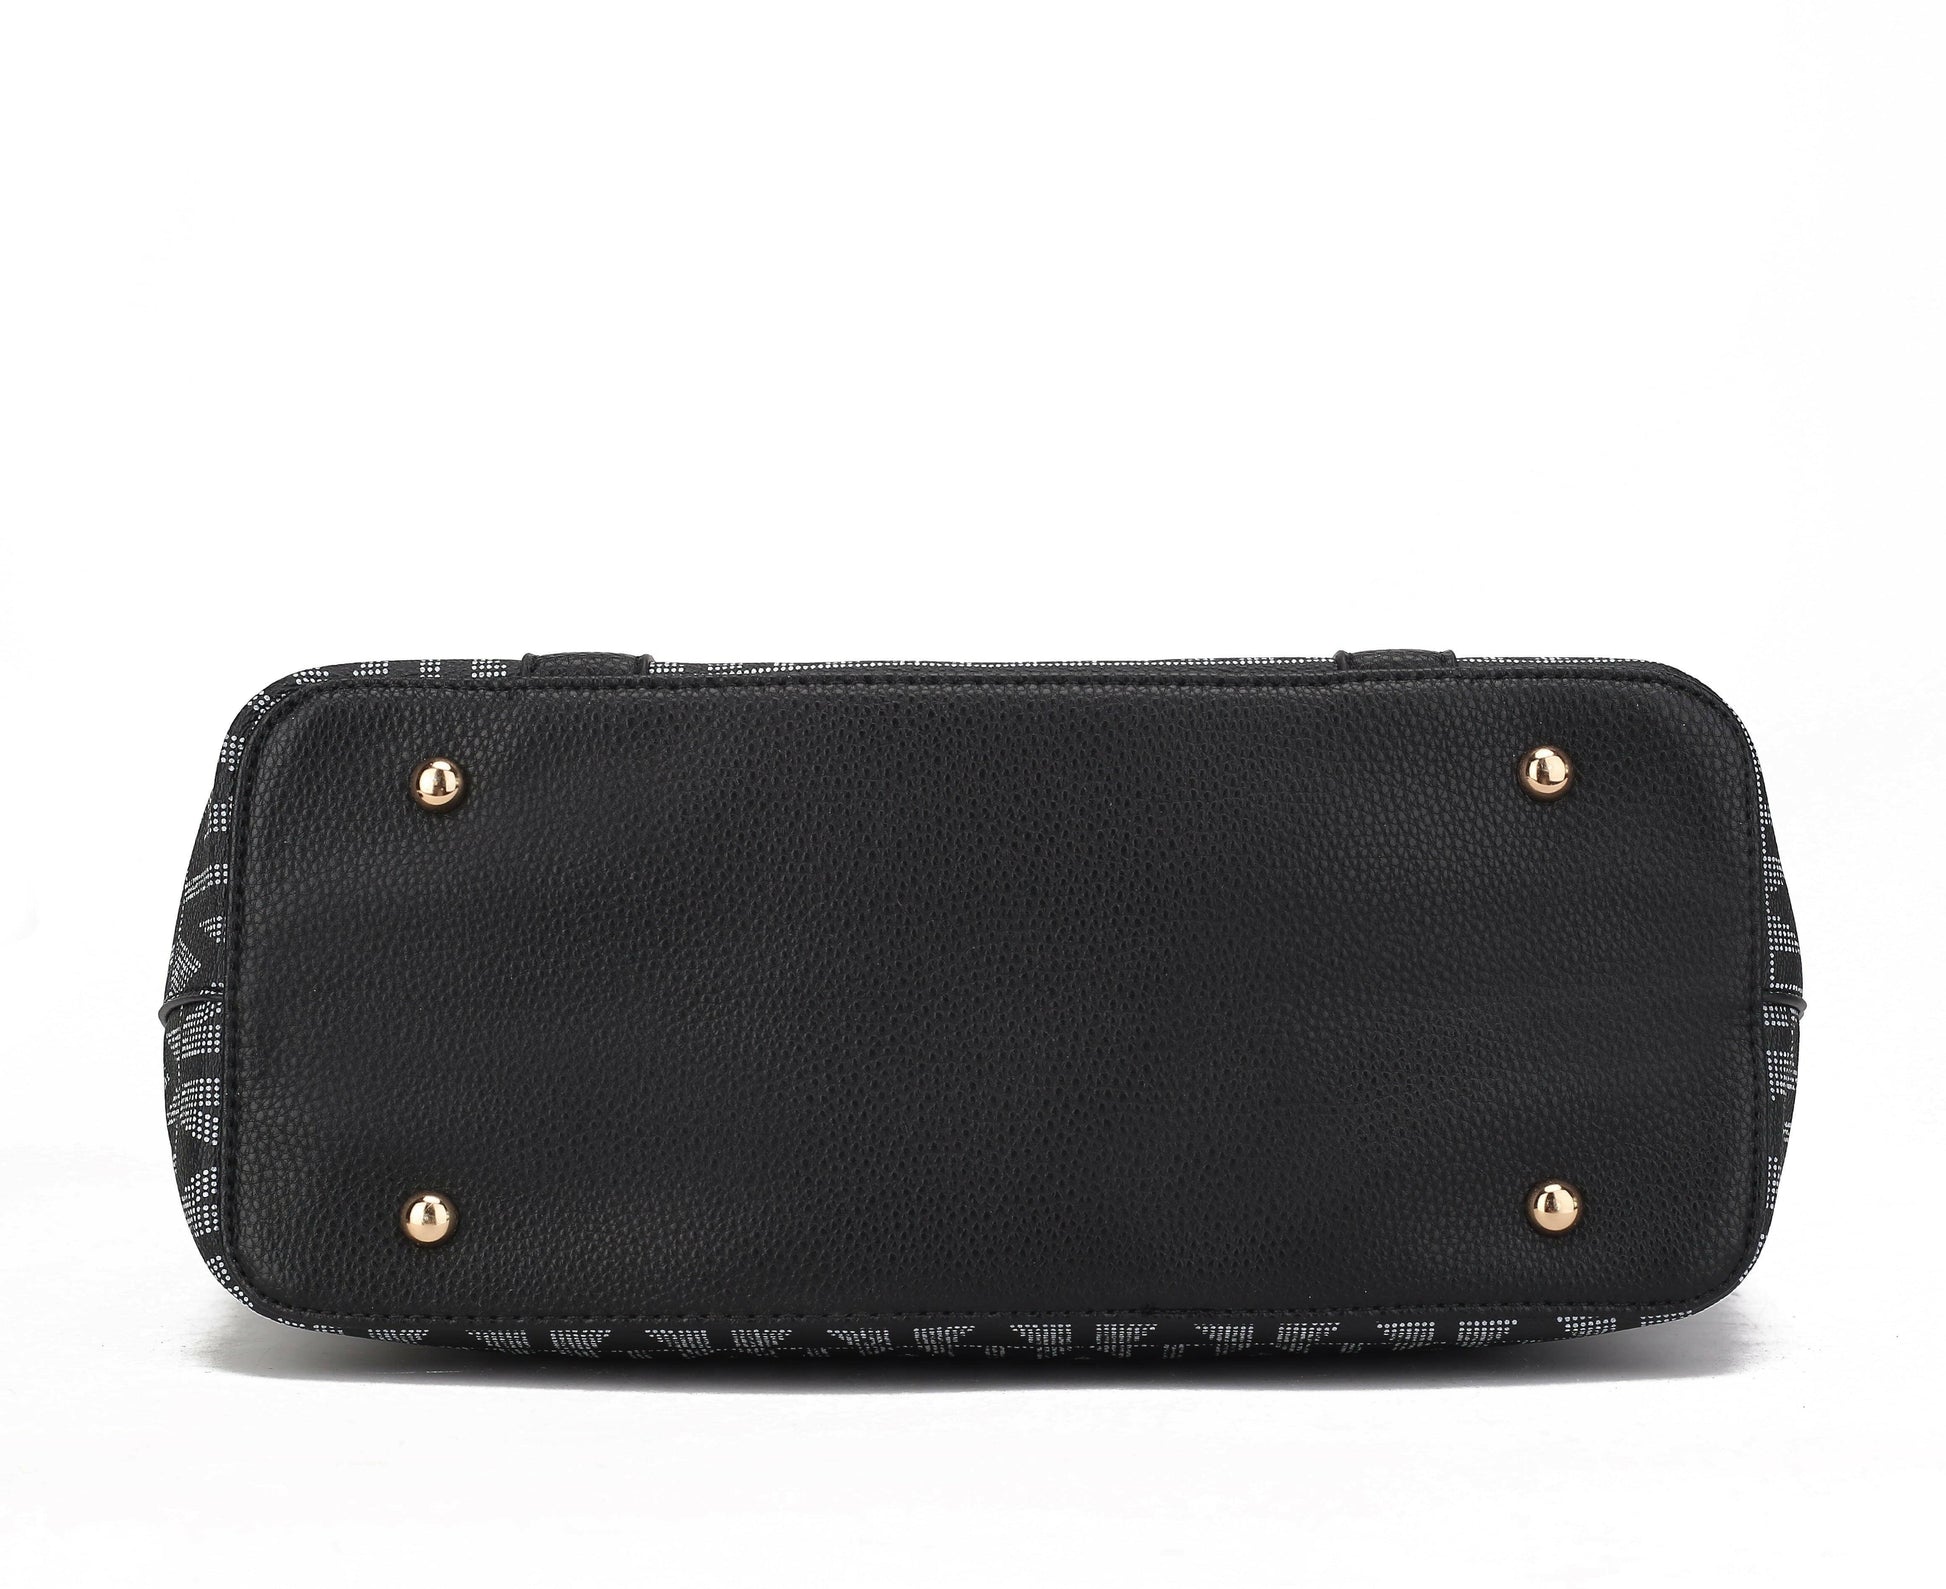 Vegan Leather Women'S Tote Bag, Small Tote Handbag, Pouch Purse & Wristlet Wallet Bag 4 Pcs Set by Mia K - Chocolate - Comfortably chic